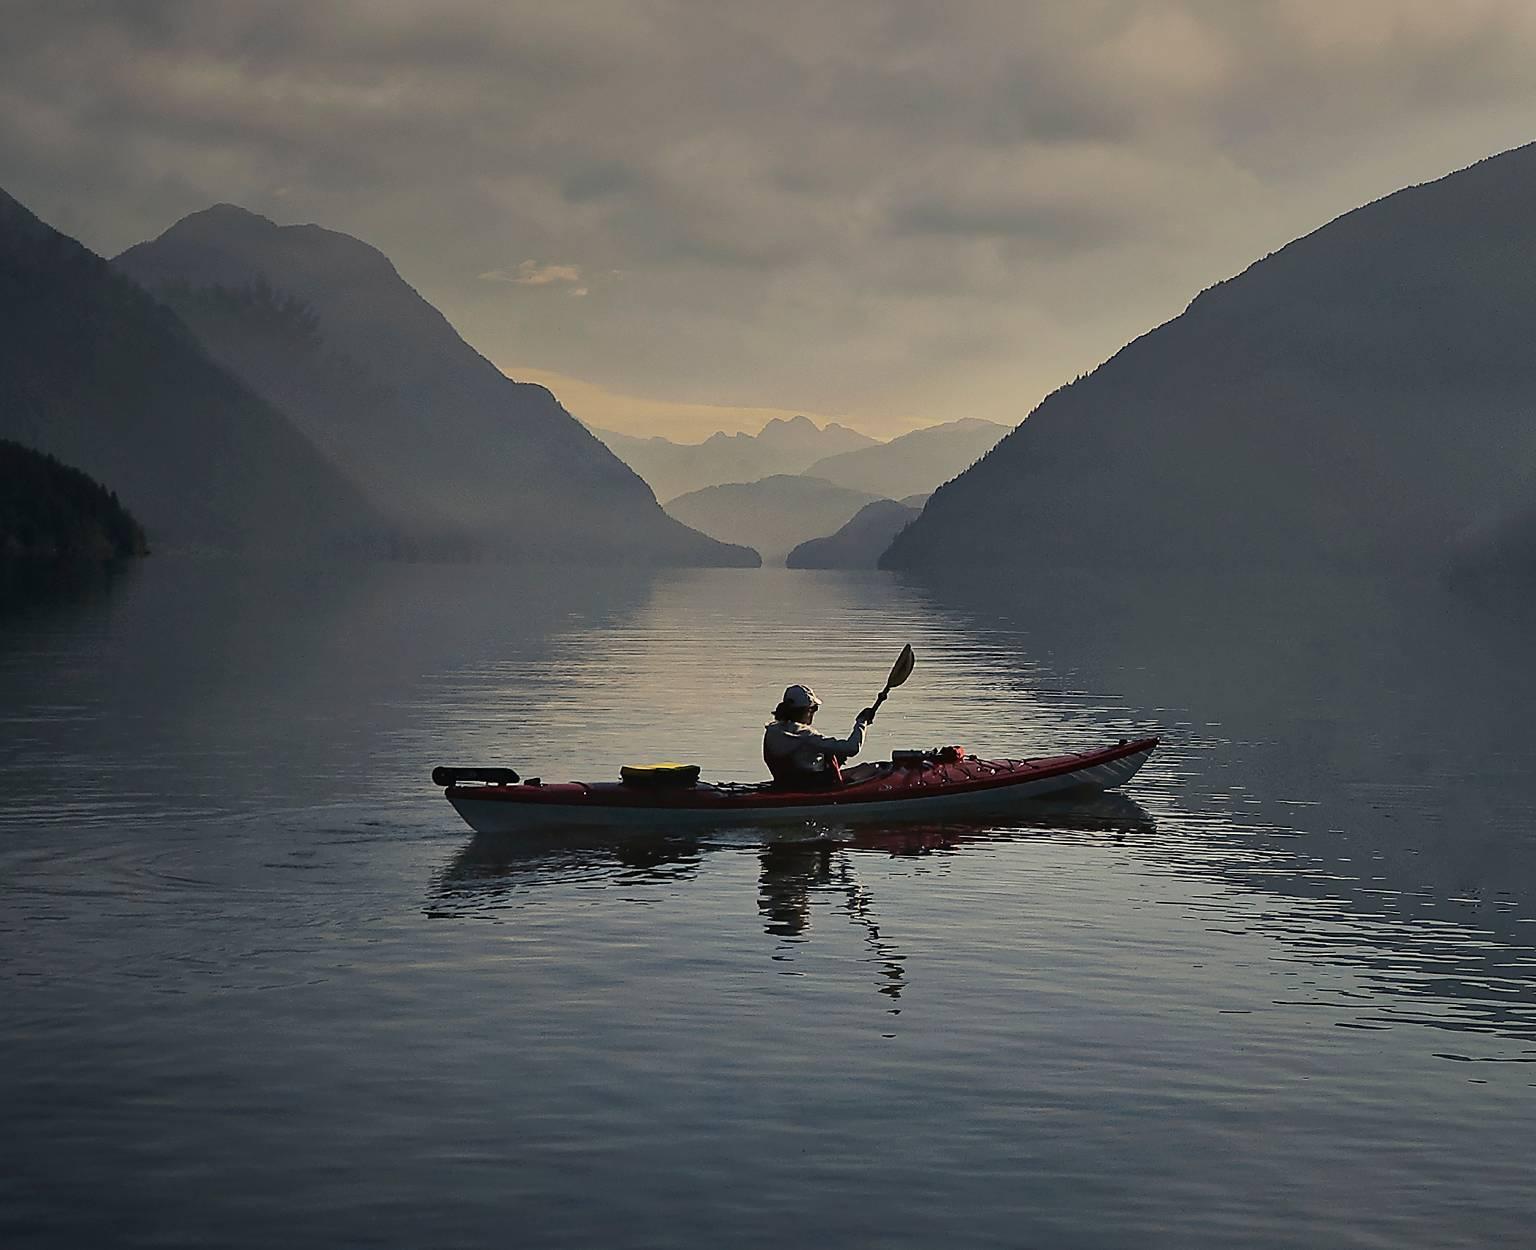 Morning Kayak, British Columbia, Canada - Photograph by Chris Gordaneer